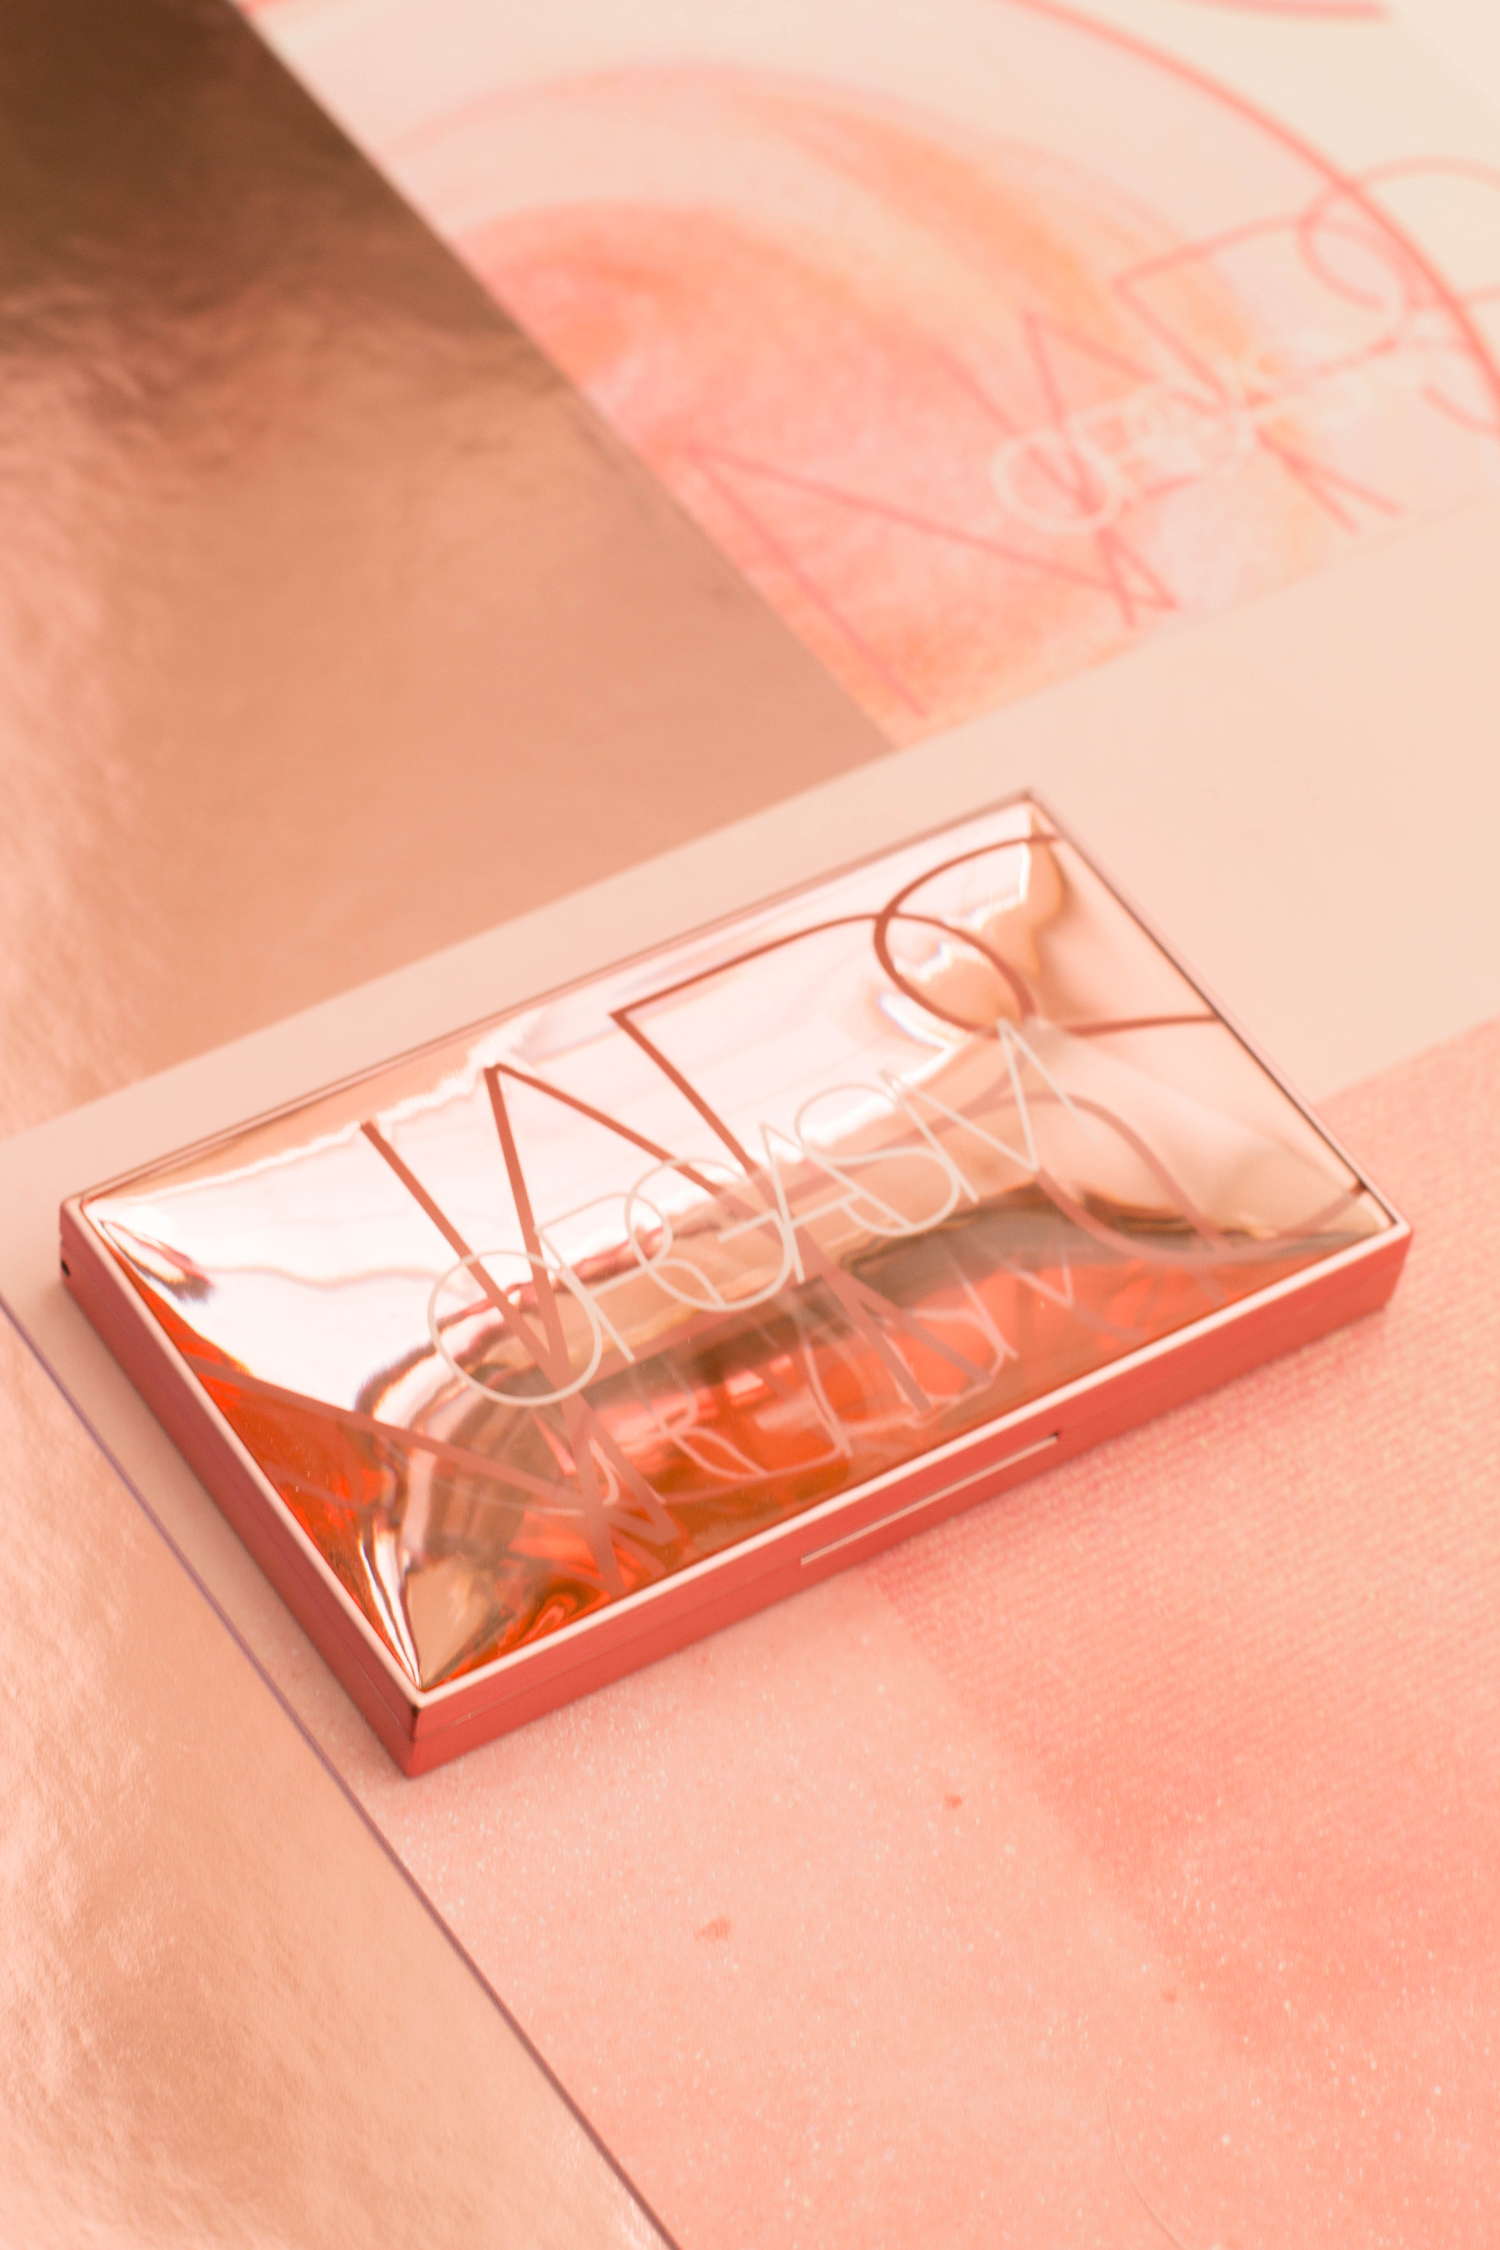 Nars Orgasm Collection Sephora Ulta Nordstrom Beauty Highlighter Blush Palette Lip Gloss Pink